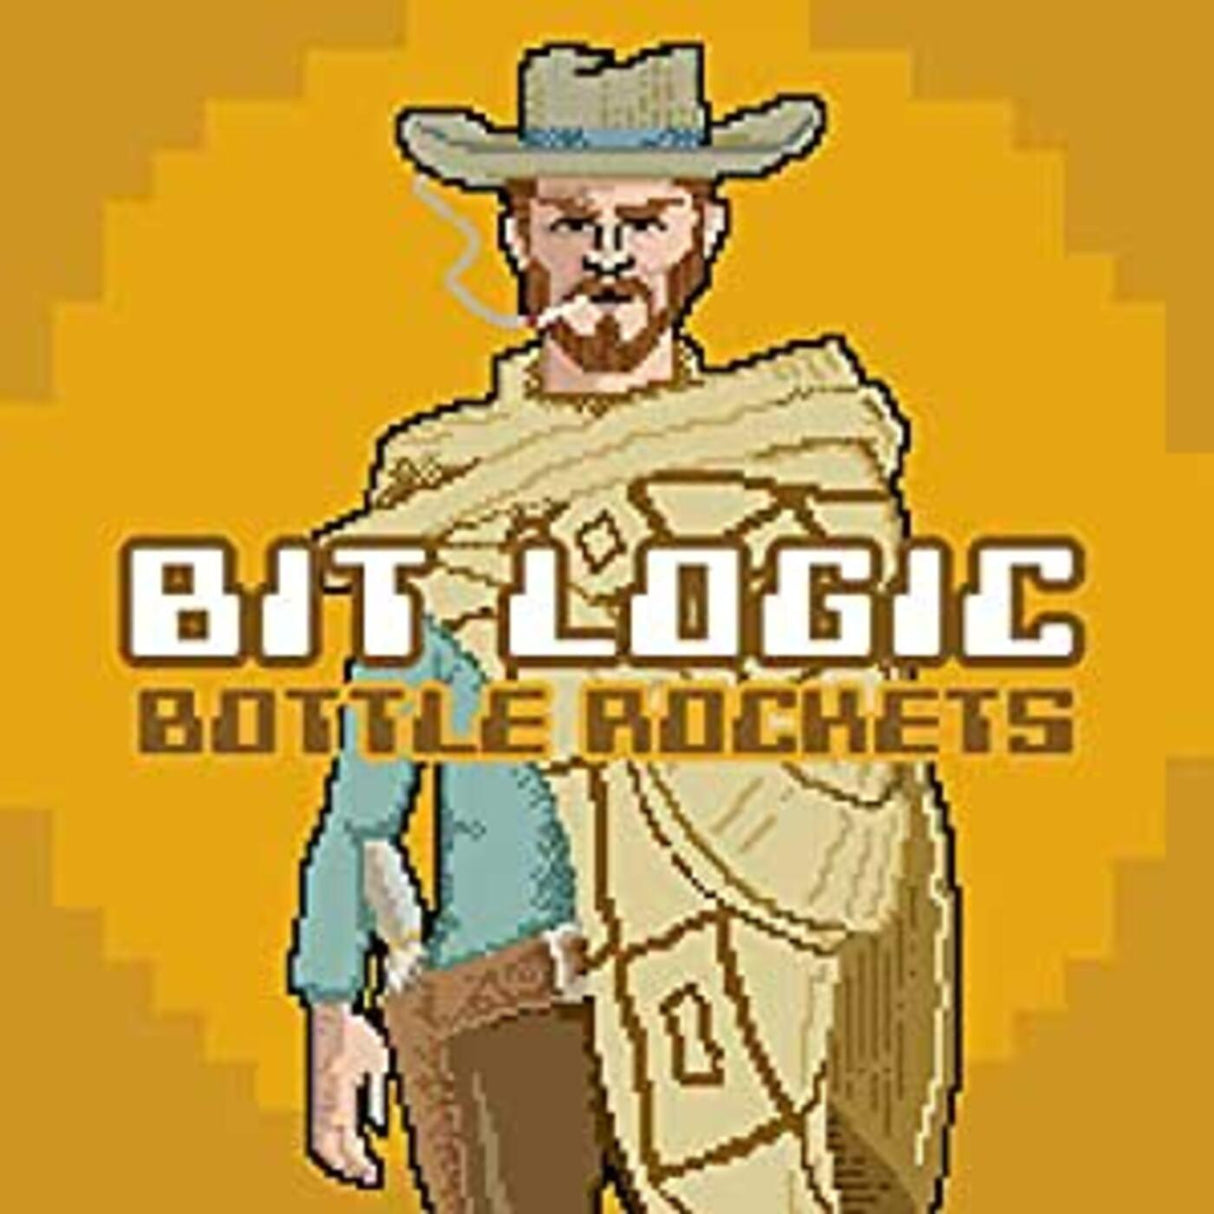 Bit Logic [CD]